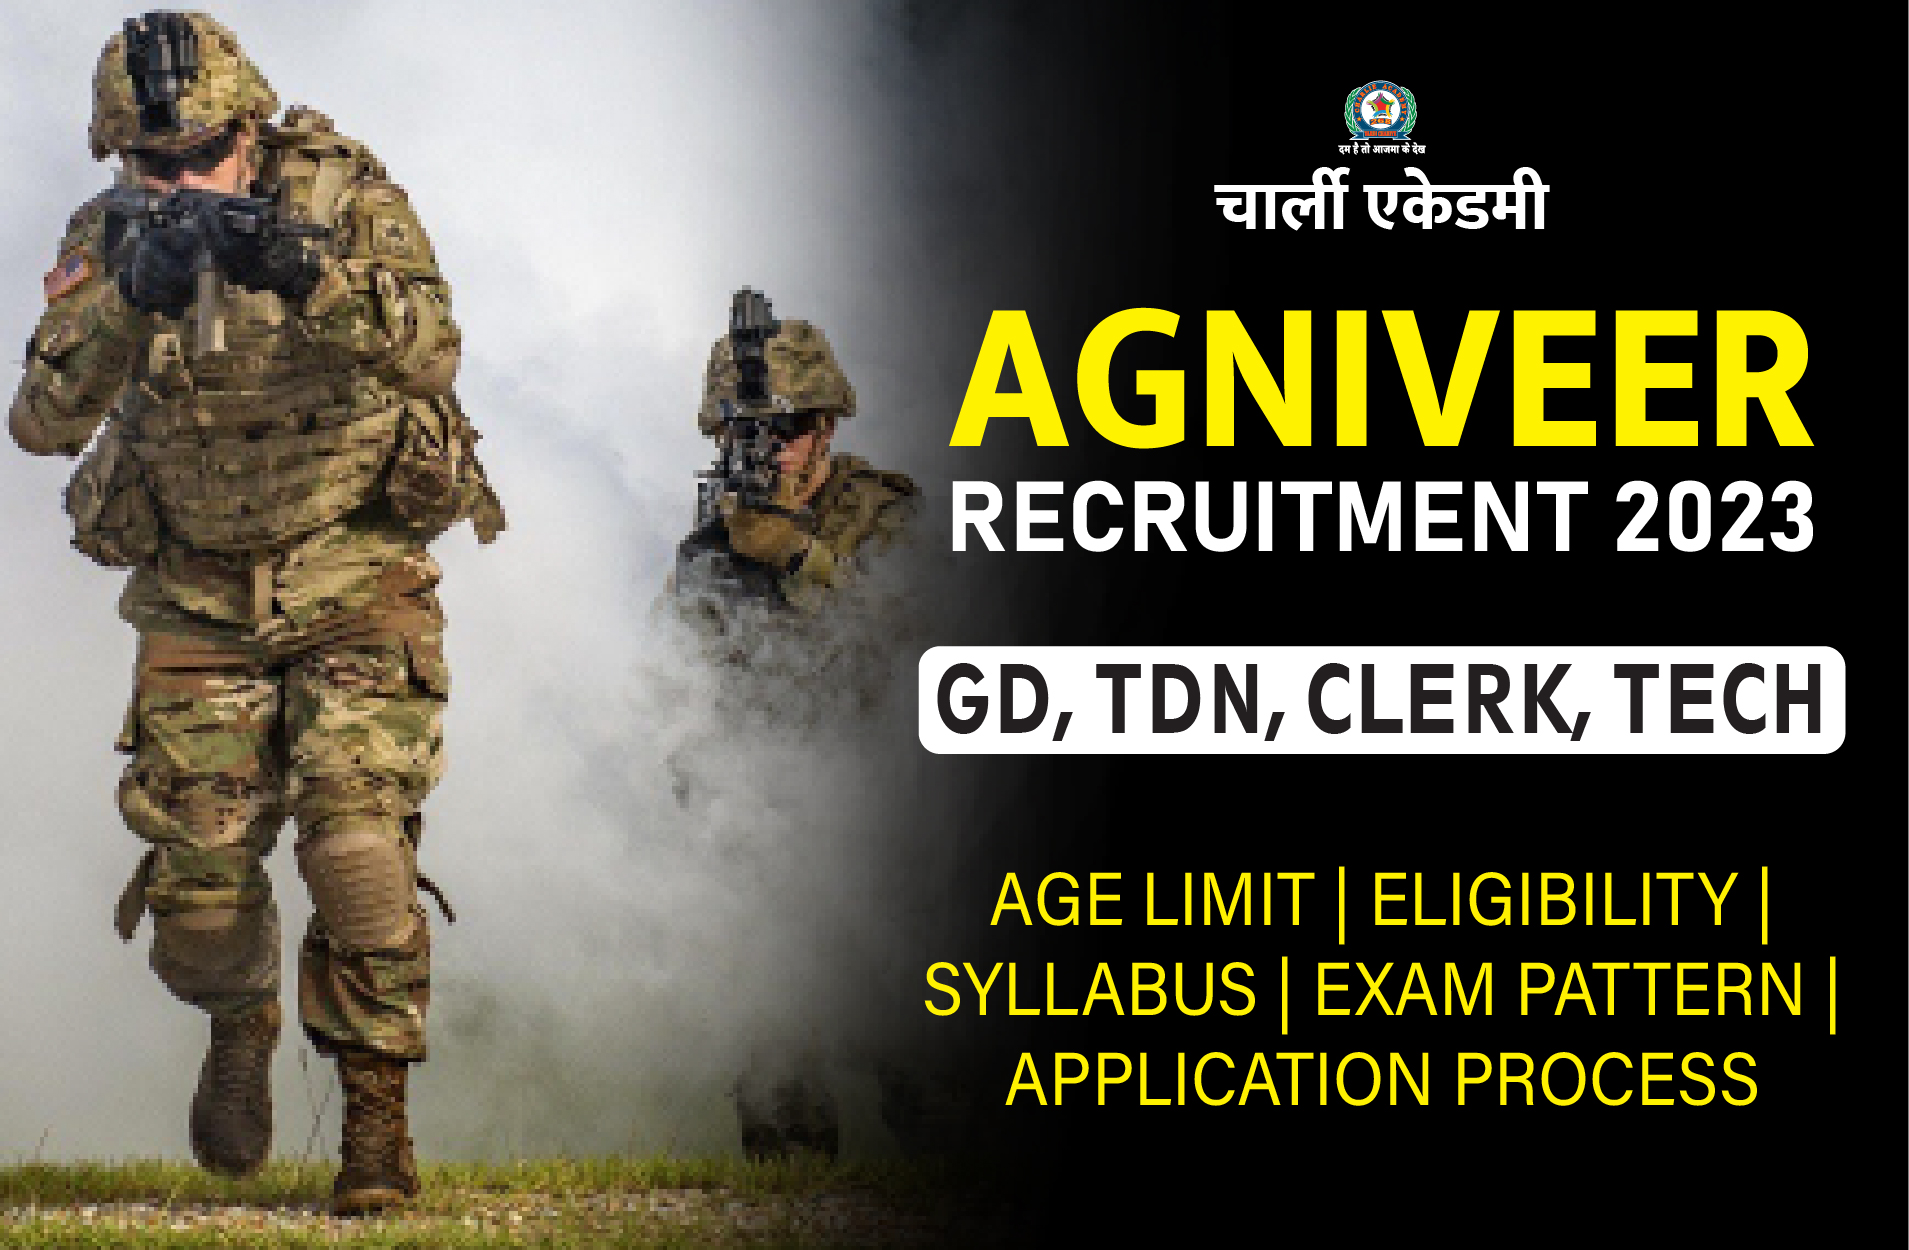 Agniveer Army Recruitment